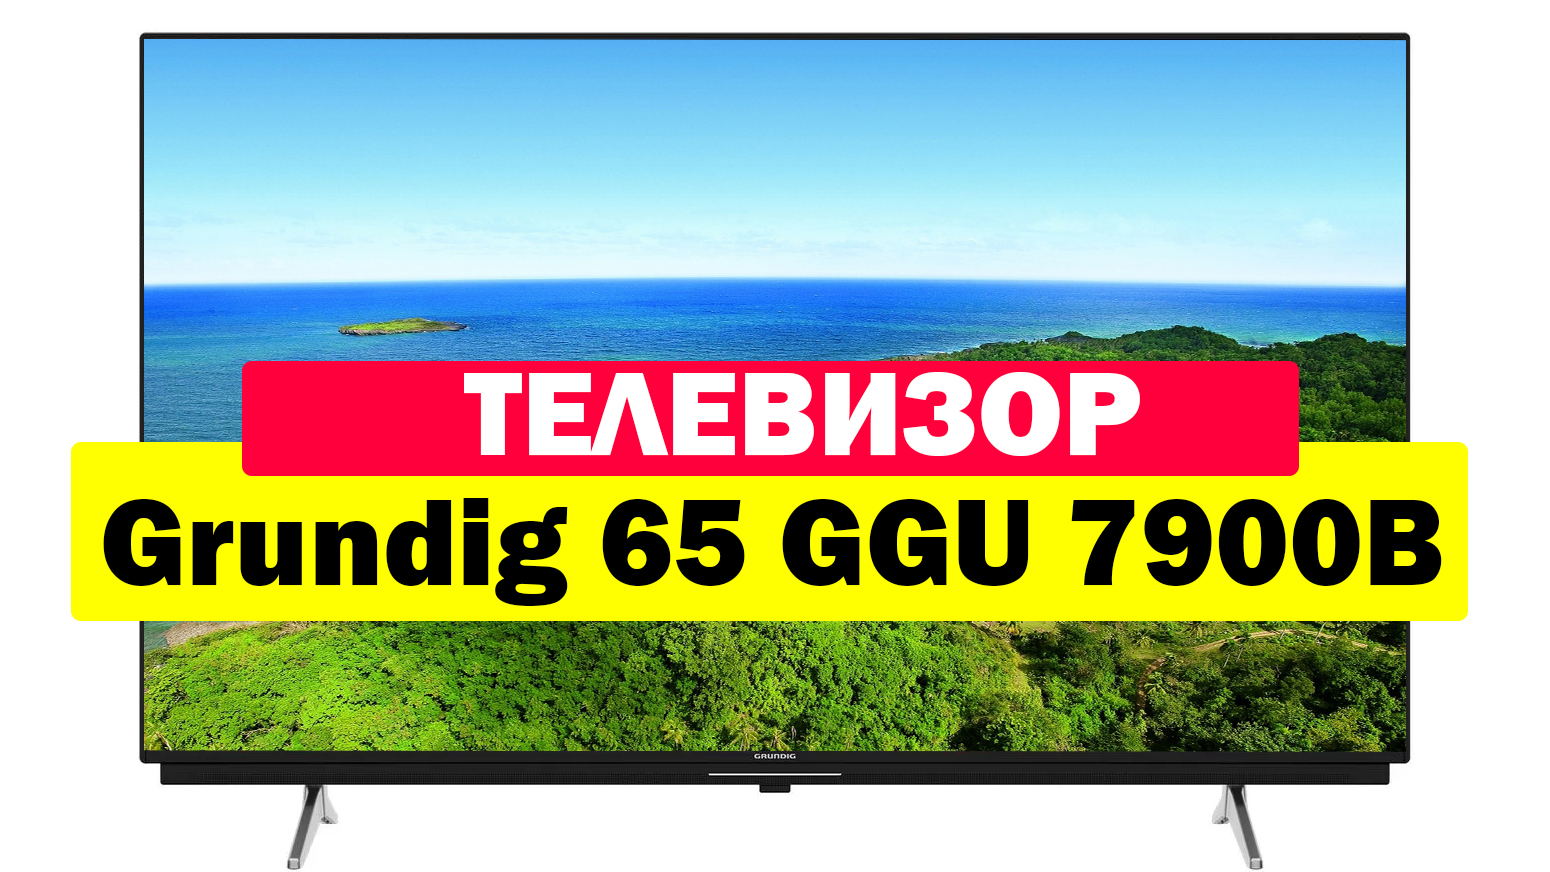 Grundig телевизор 7900b 65. Grundig 65. Grundig телевизор. Телевизор Grundig 55 GGU 7900b подсветка. Телевизор Grundig 65 GGU 7970a.